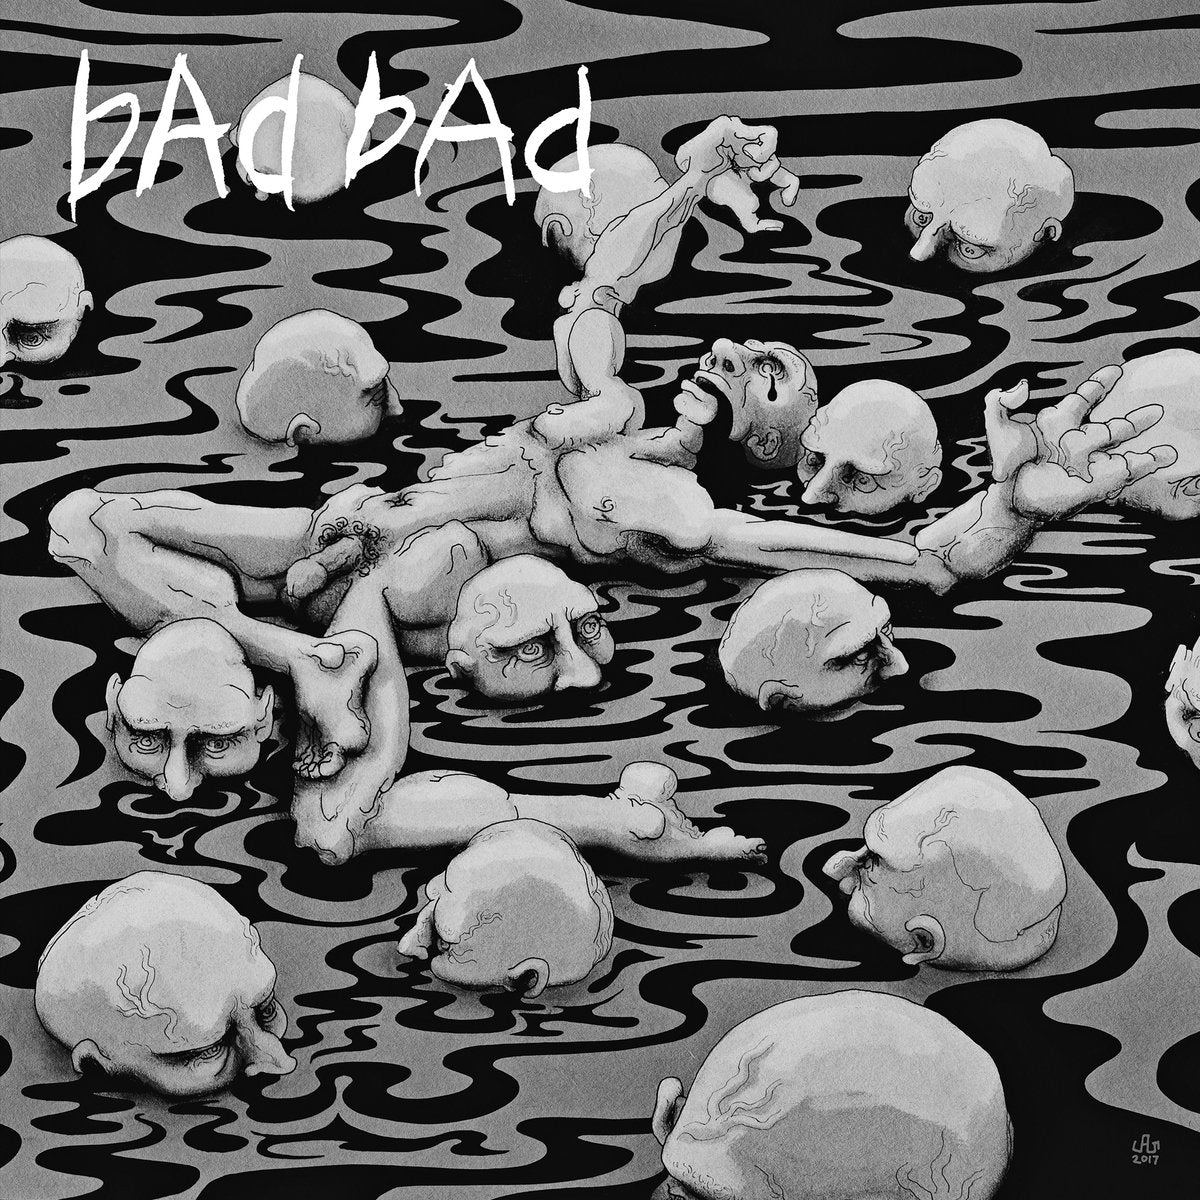 Bad Bad- Modern Man 7” ~COVER LTD TO 85 COPIES!